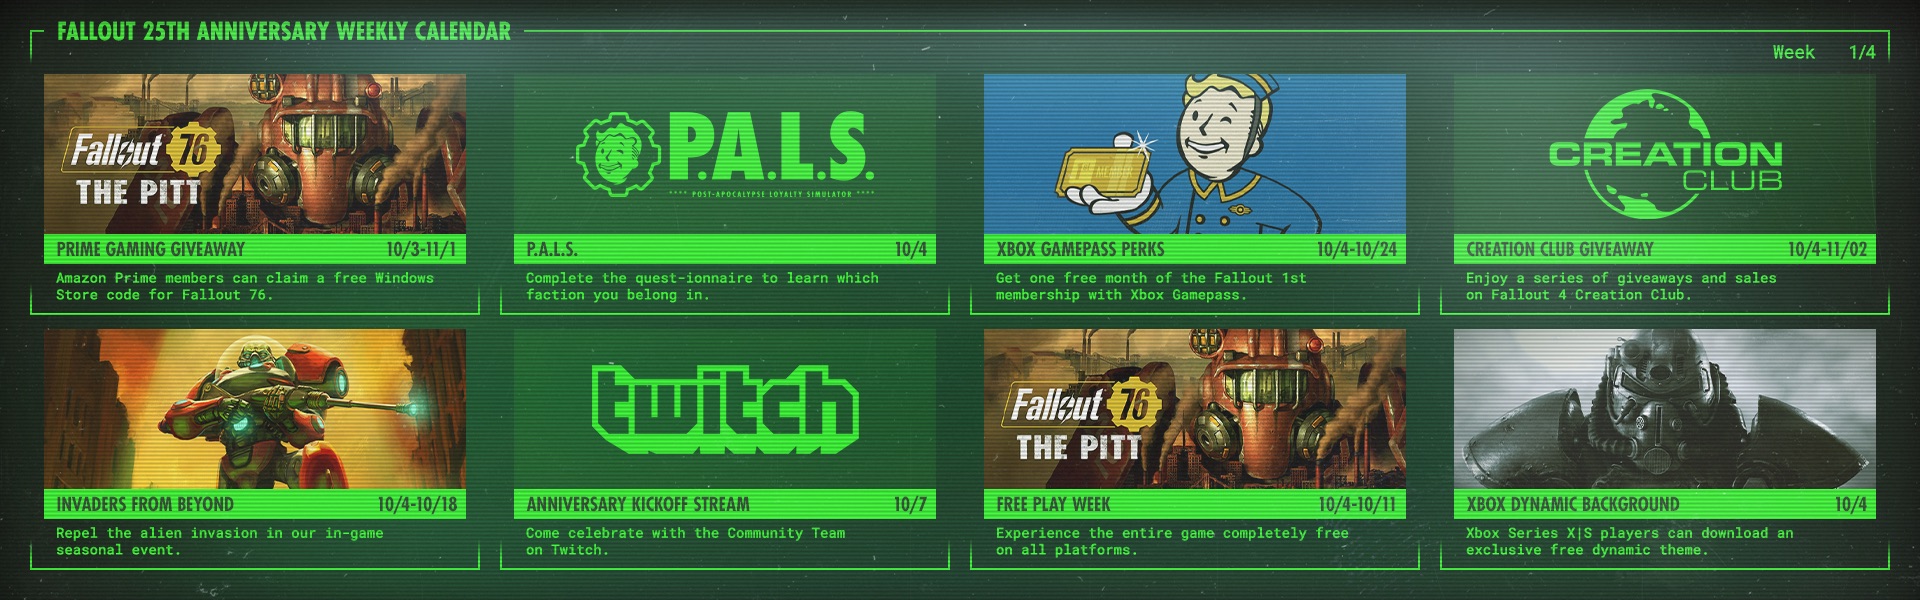 Fallout celebra 25 anos - Semana 1